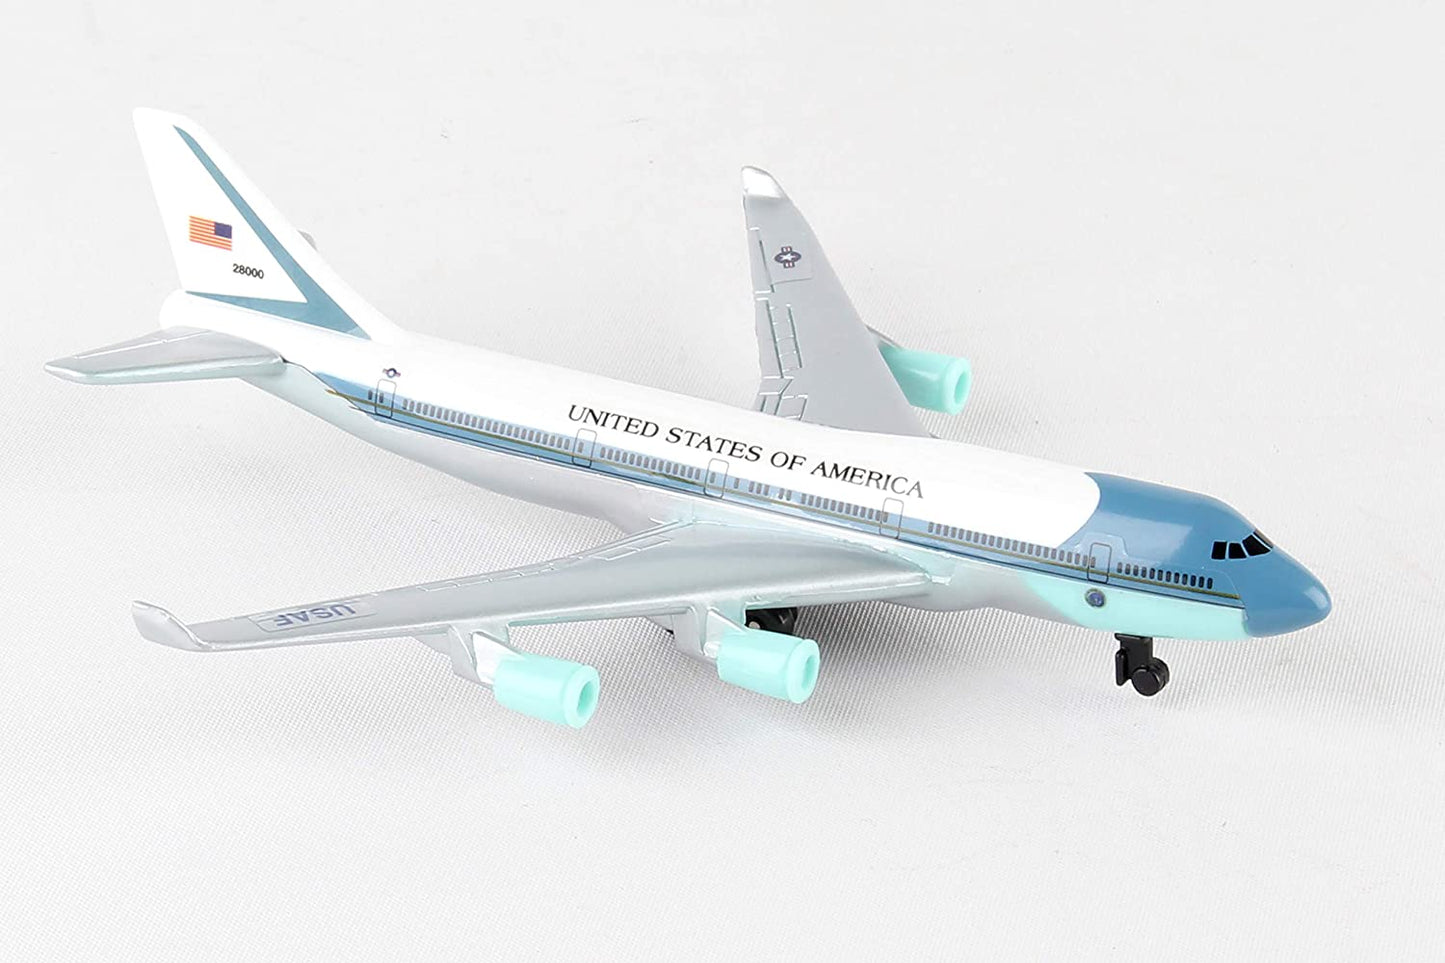 Air Force One, United States Of America Boeing 747 Kids Die cast Airplane Play-Set